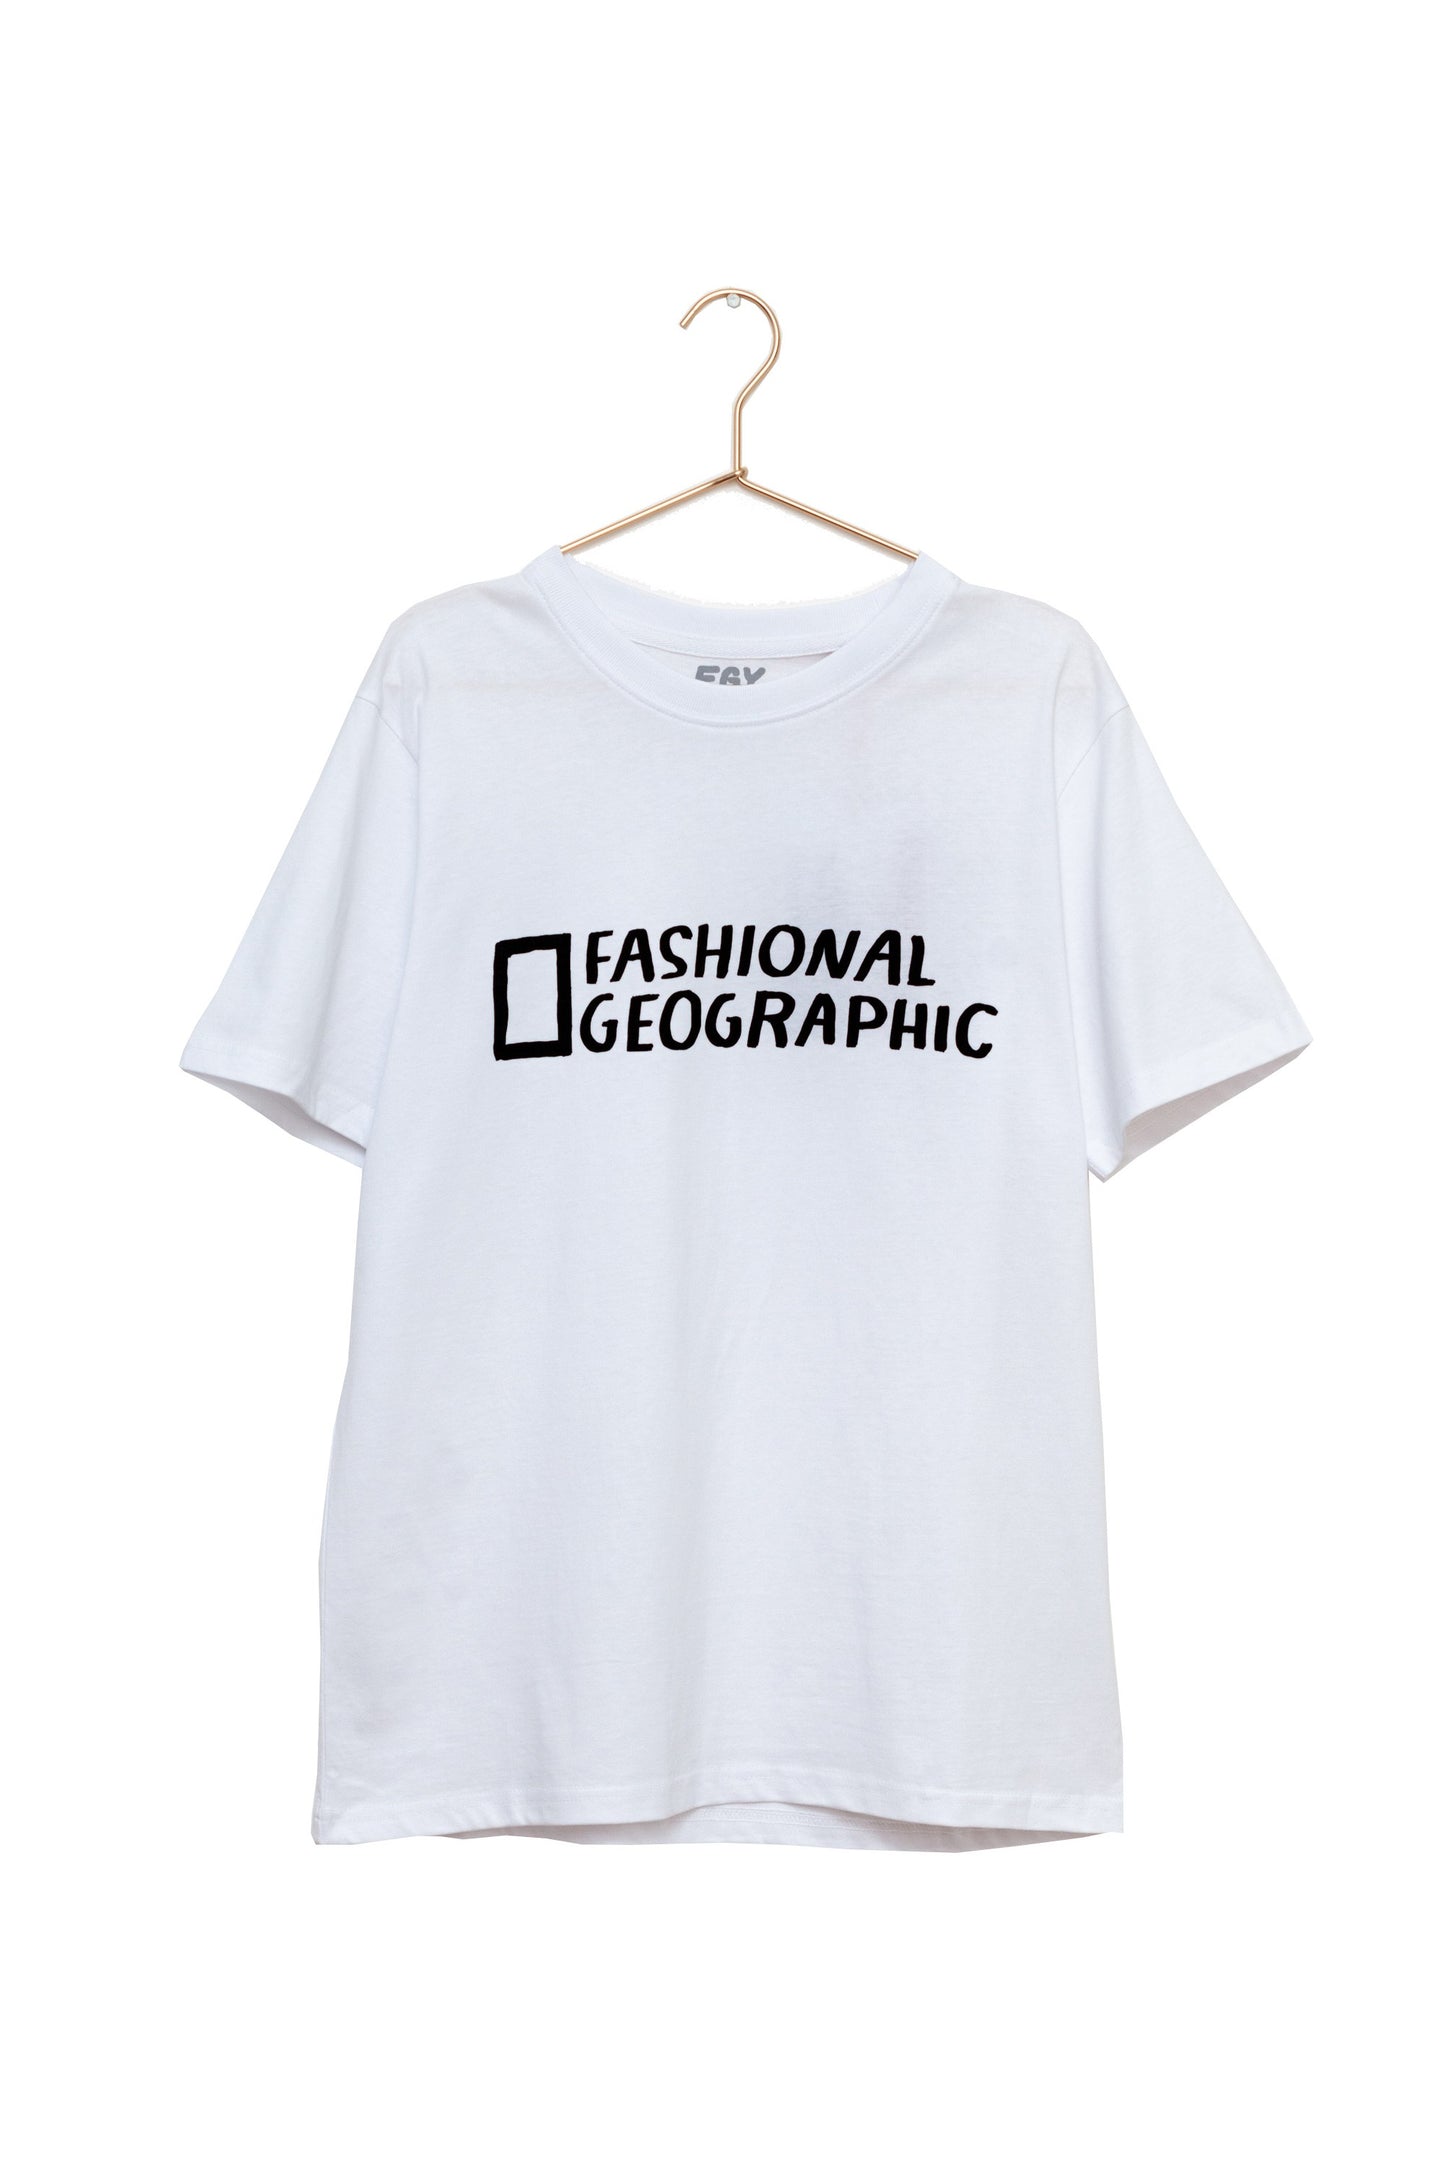 Organic Cotton Fashional Geographic t-shirt